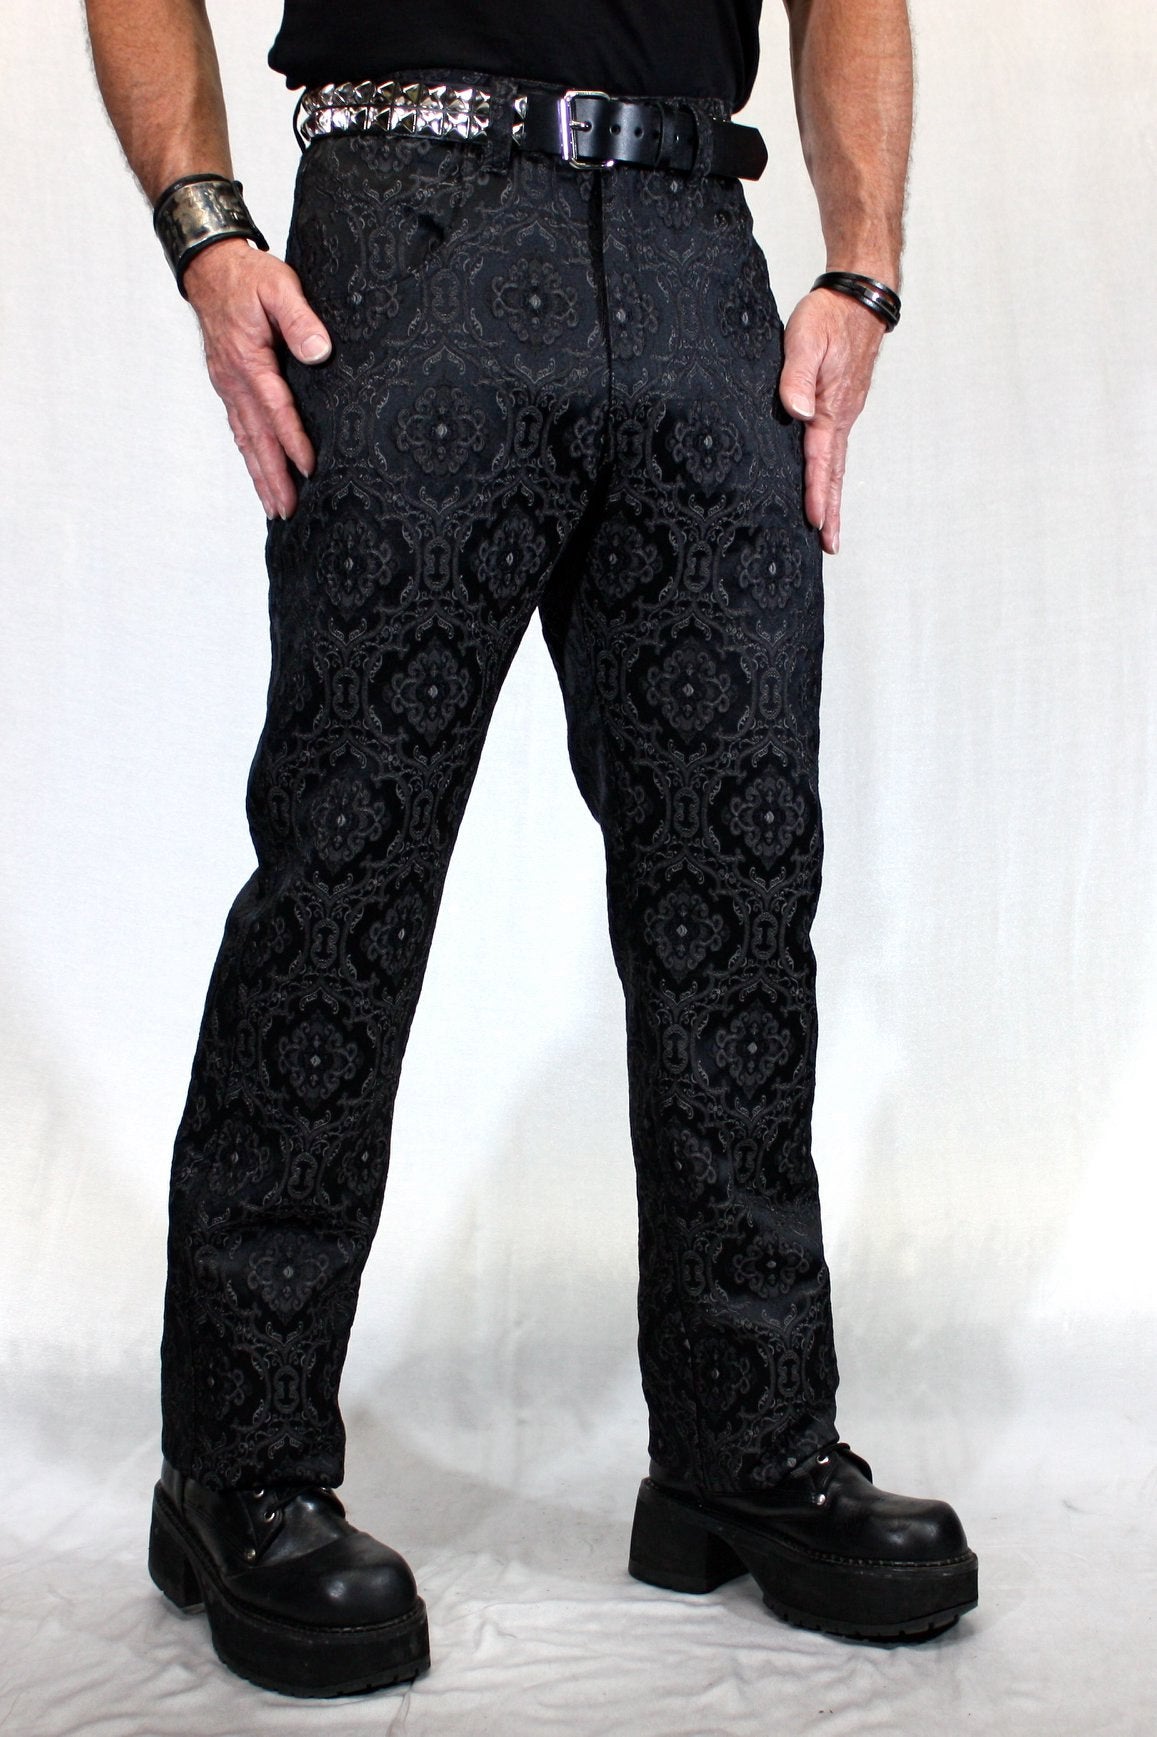 Latest Mens Fashion Trousers Pants Black Brocade Gothic Steampunk VTG  Aristocrat | eBay